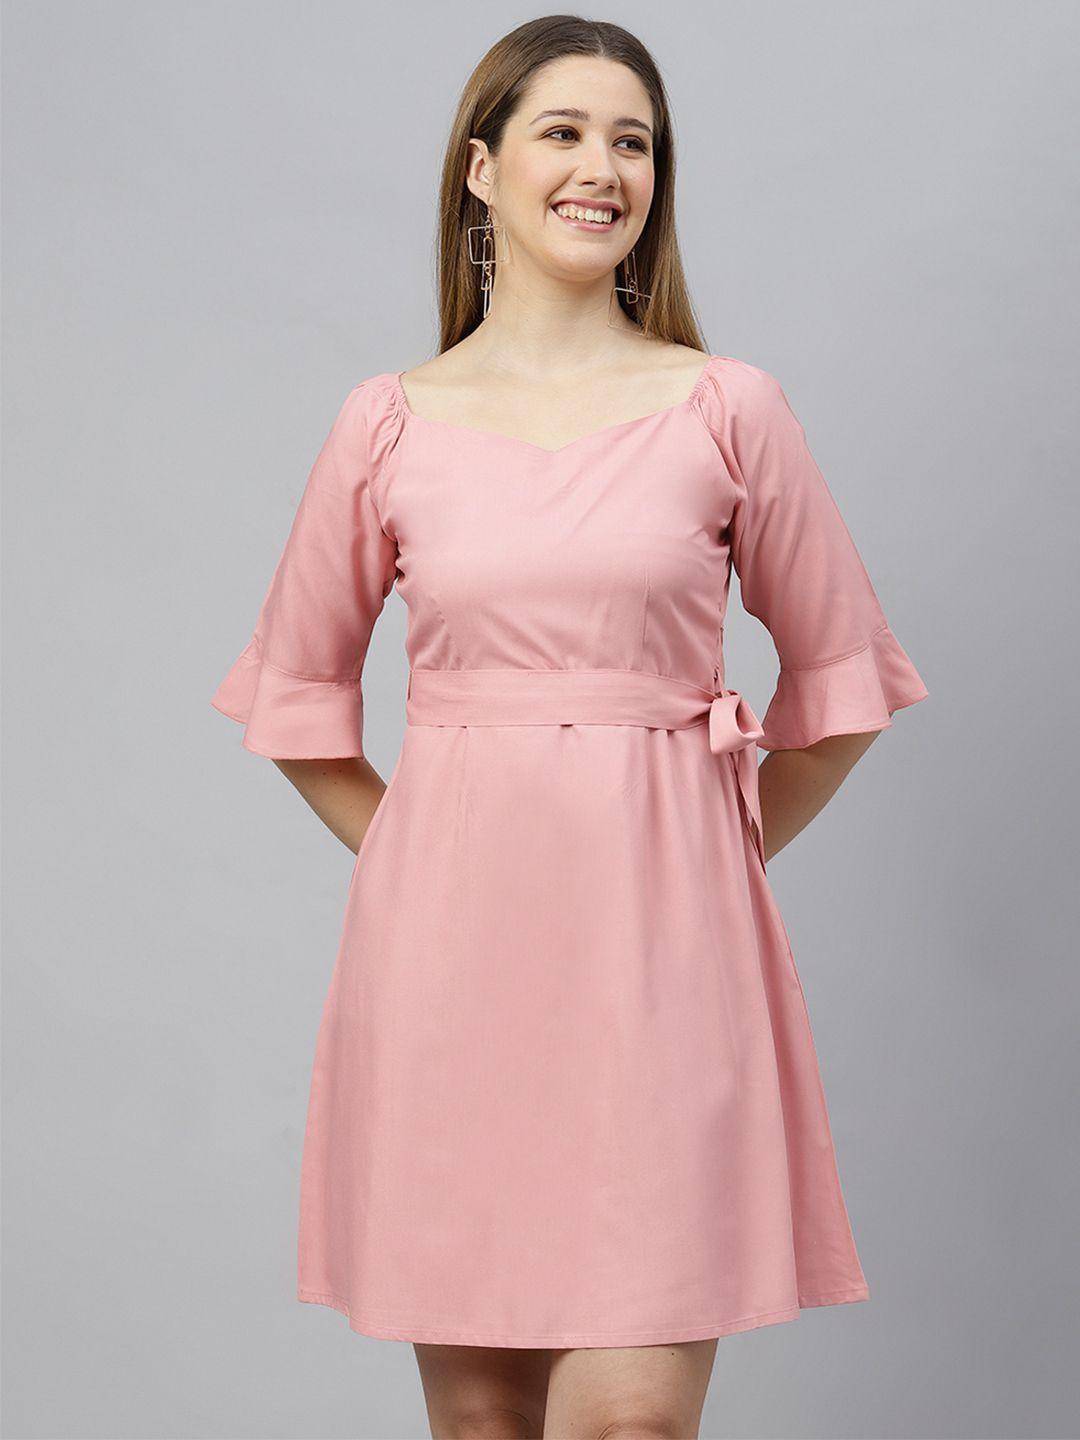 flamboyant pink a-line dress